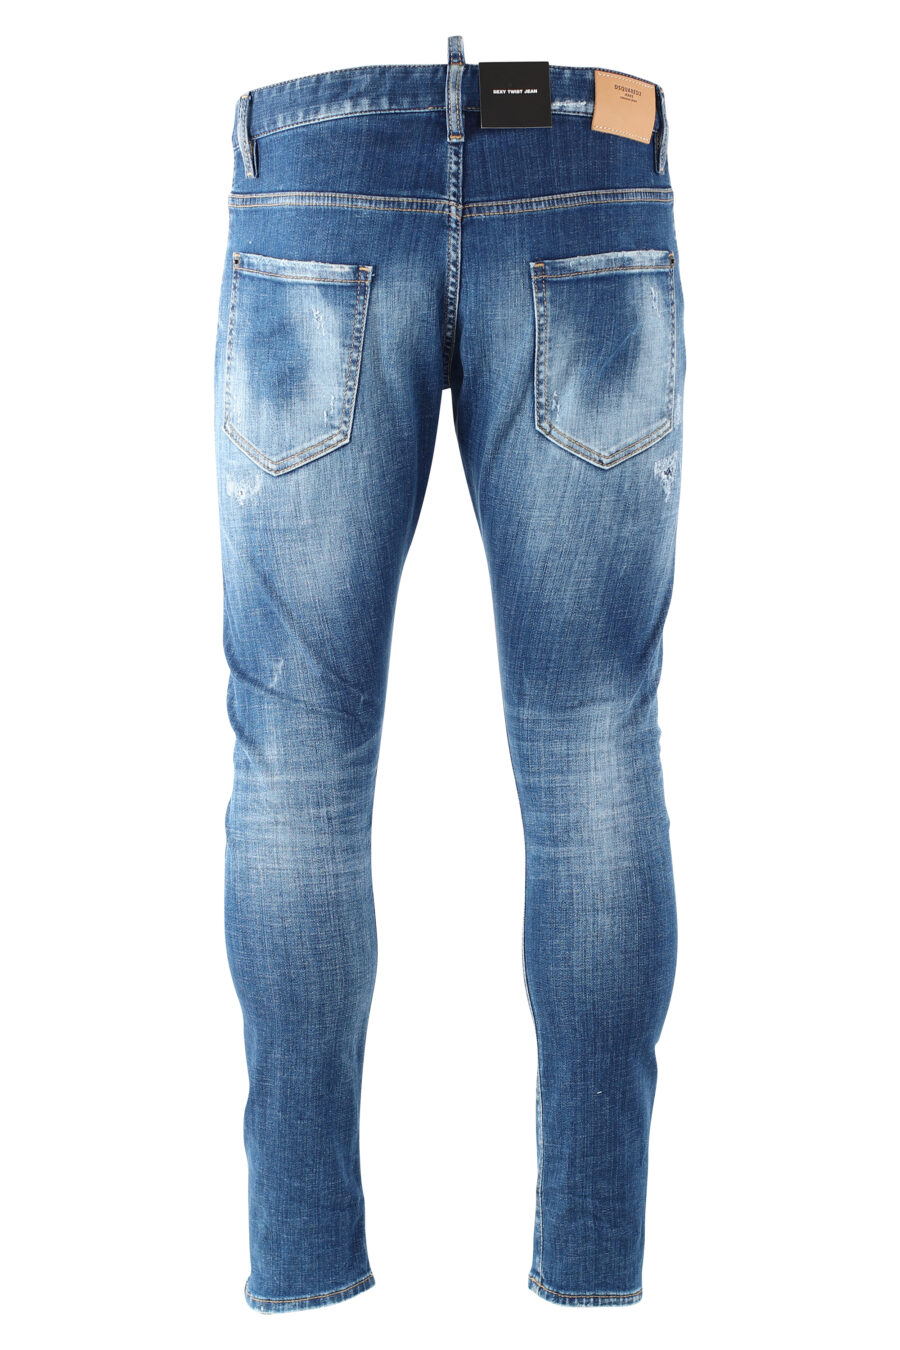 Pantalón vaquero "sexy twiste jean" azul desgastado con rotos - IMG 9697